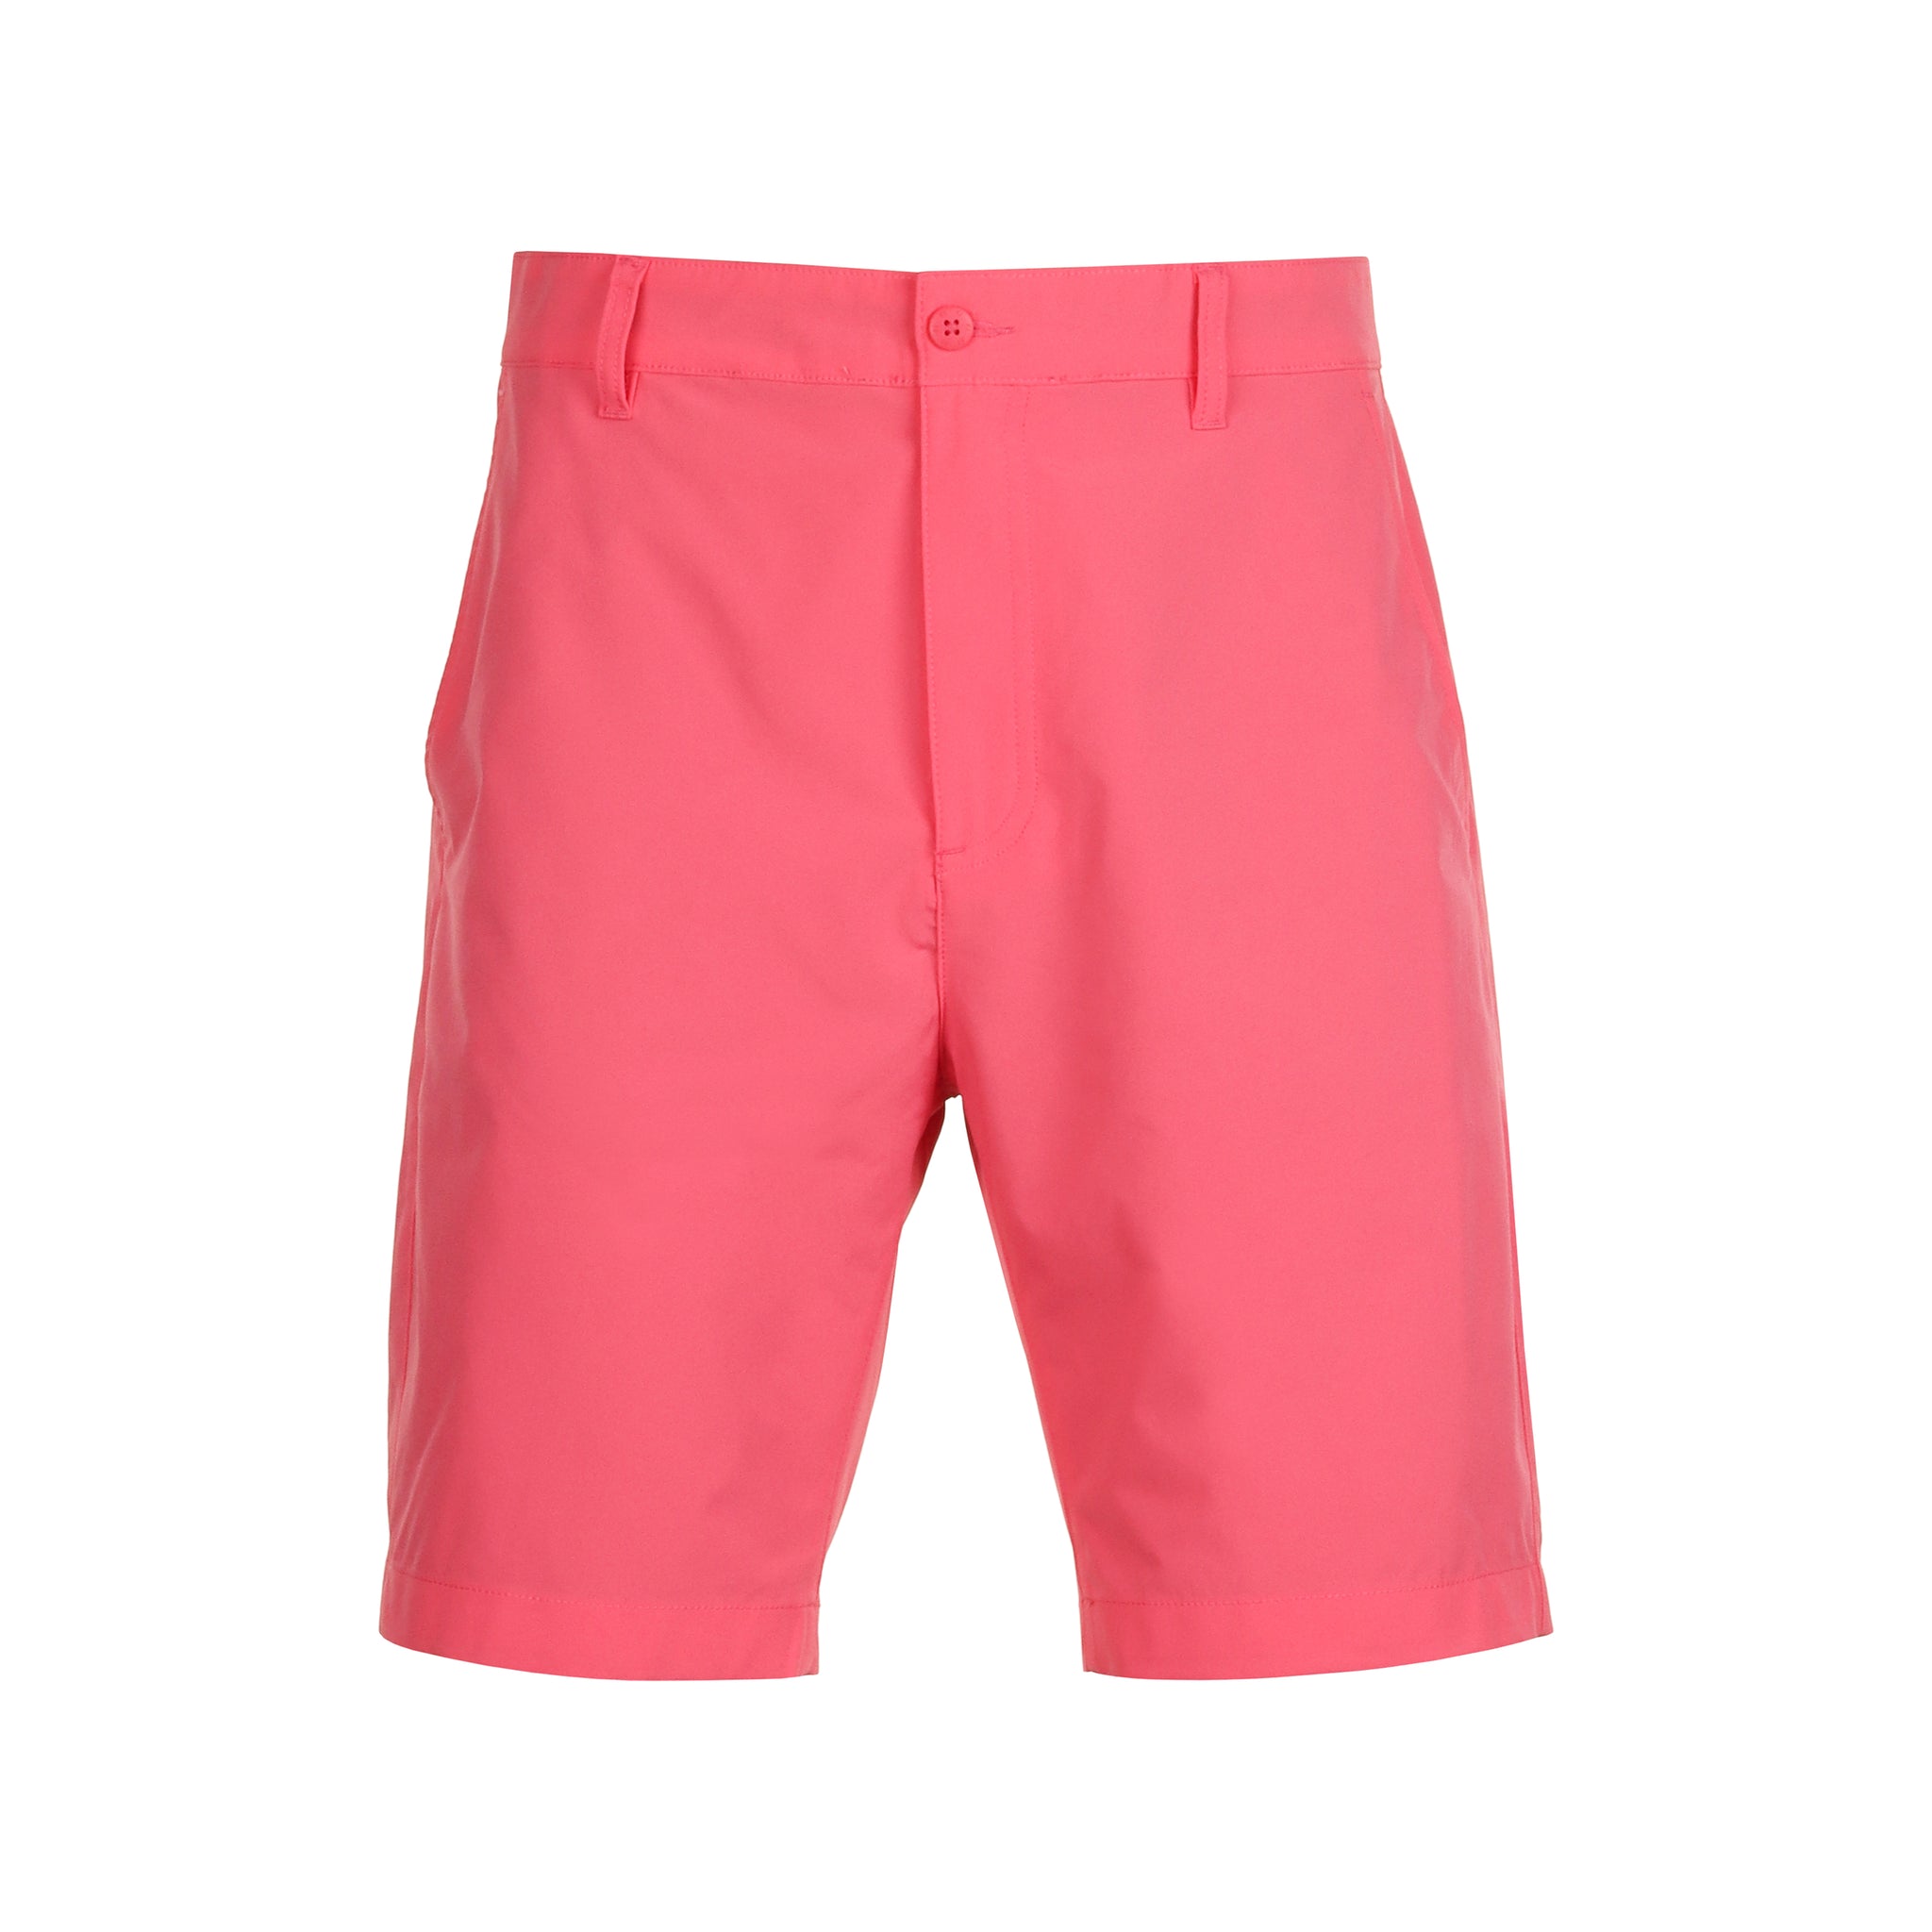 footjoy-fj-par-shorts-81660-coral-red